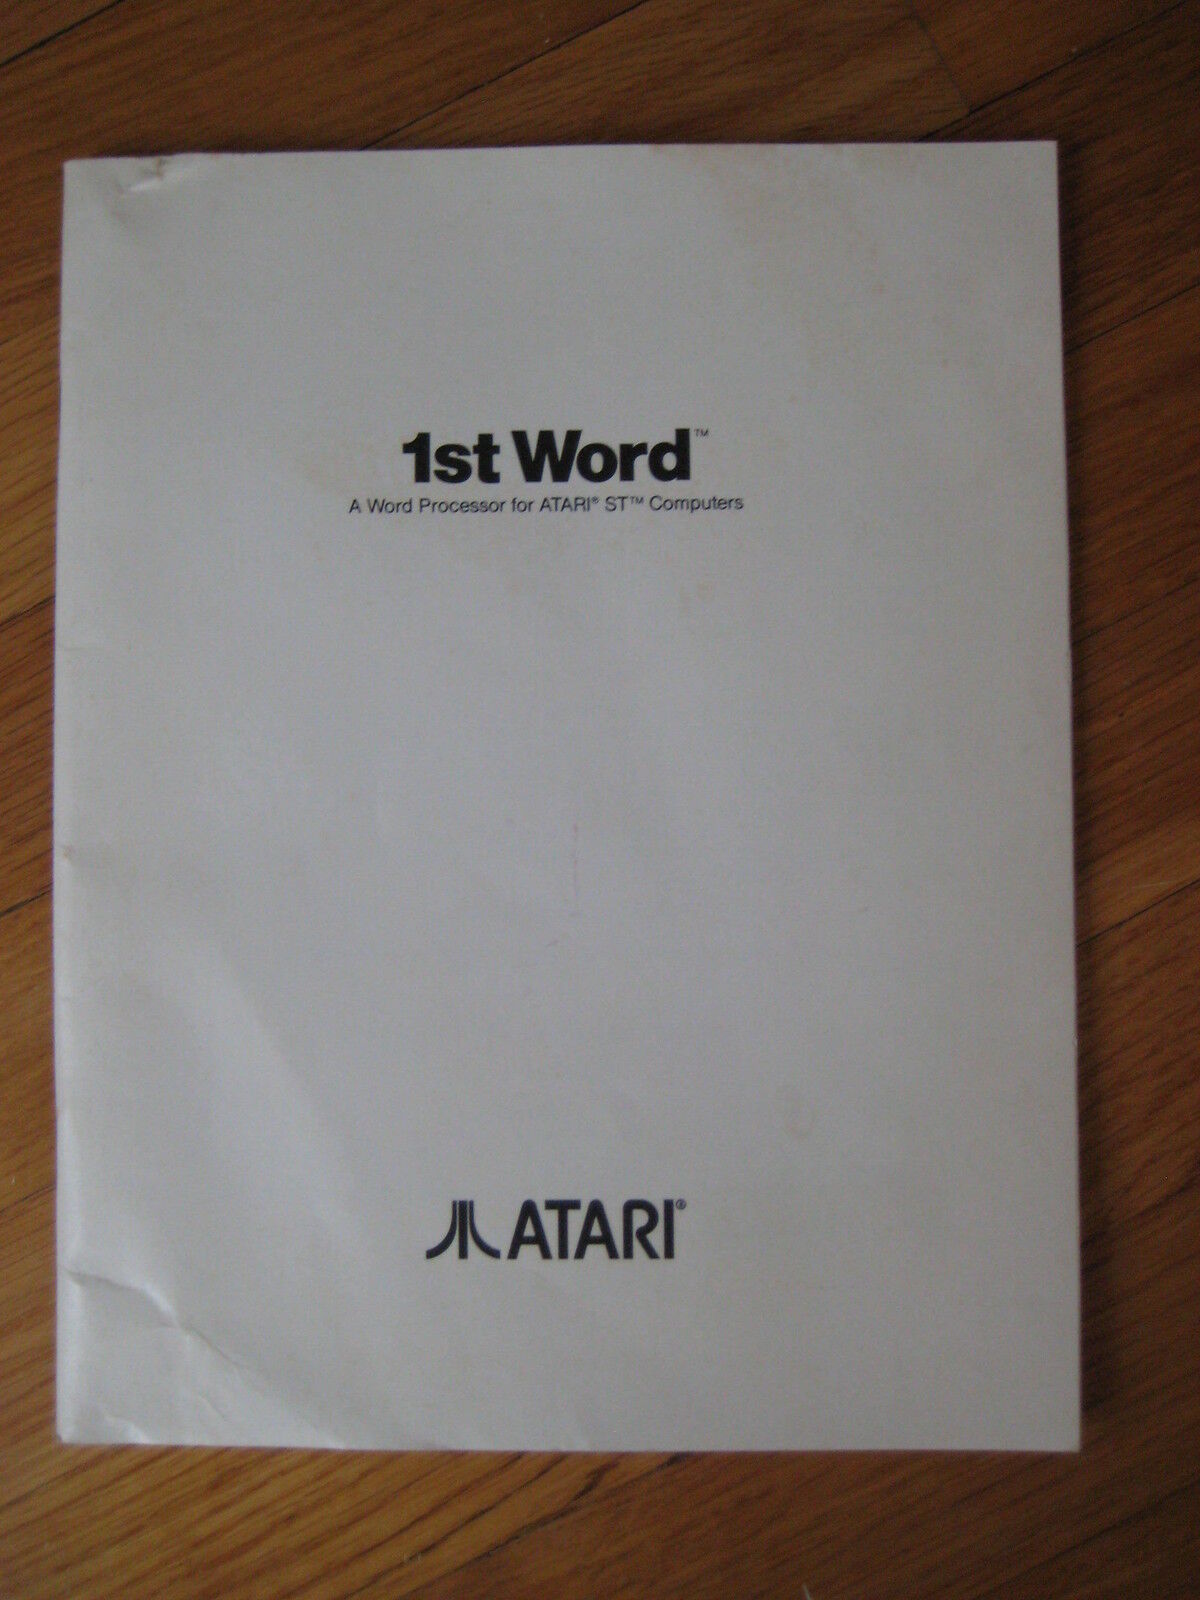 1985 vintage 1st Word Processor Atari ST computer word processing program manual